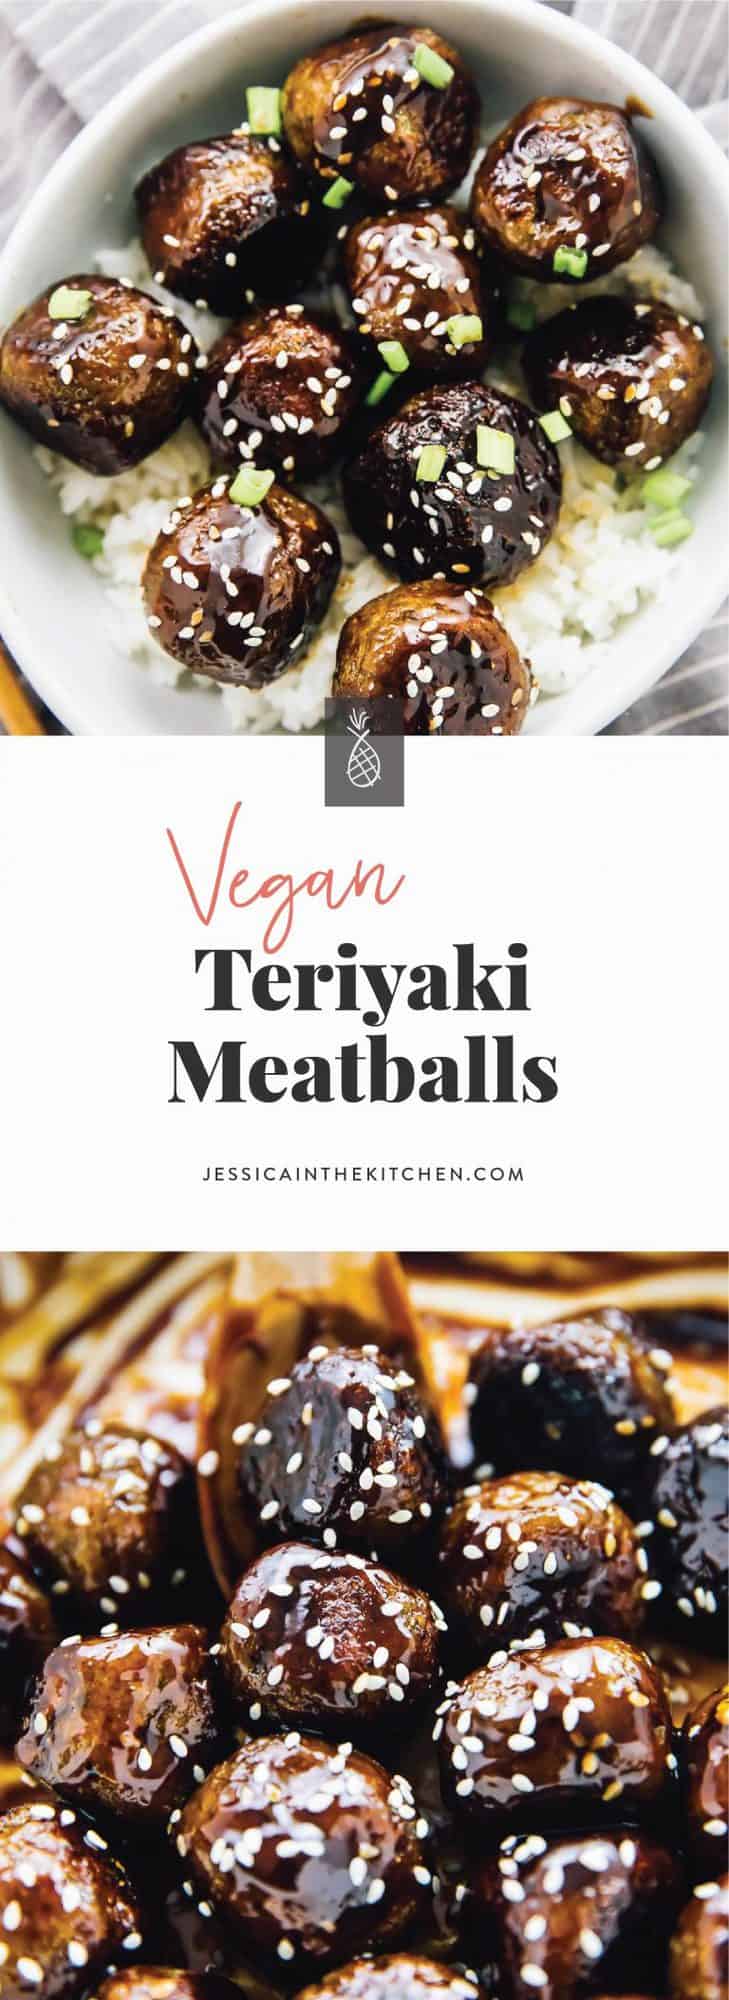 Vegan Meatballs (Sweet & Sticky) - Jessica in the Kitchen